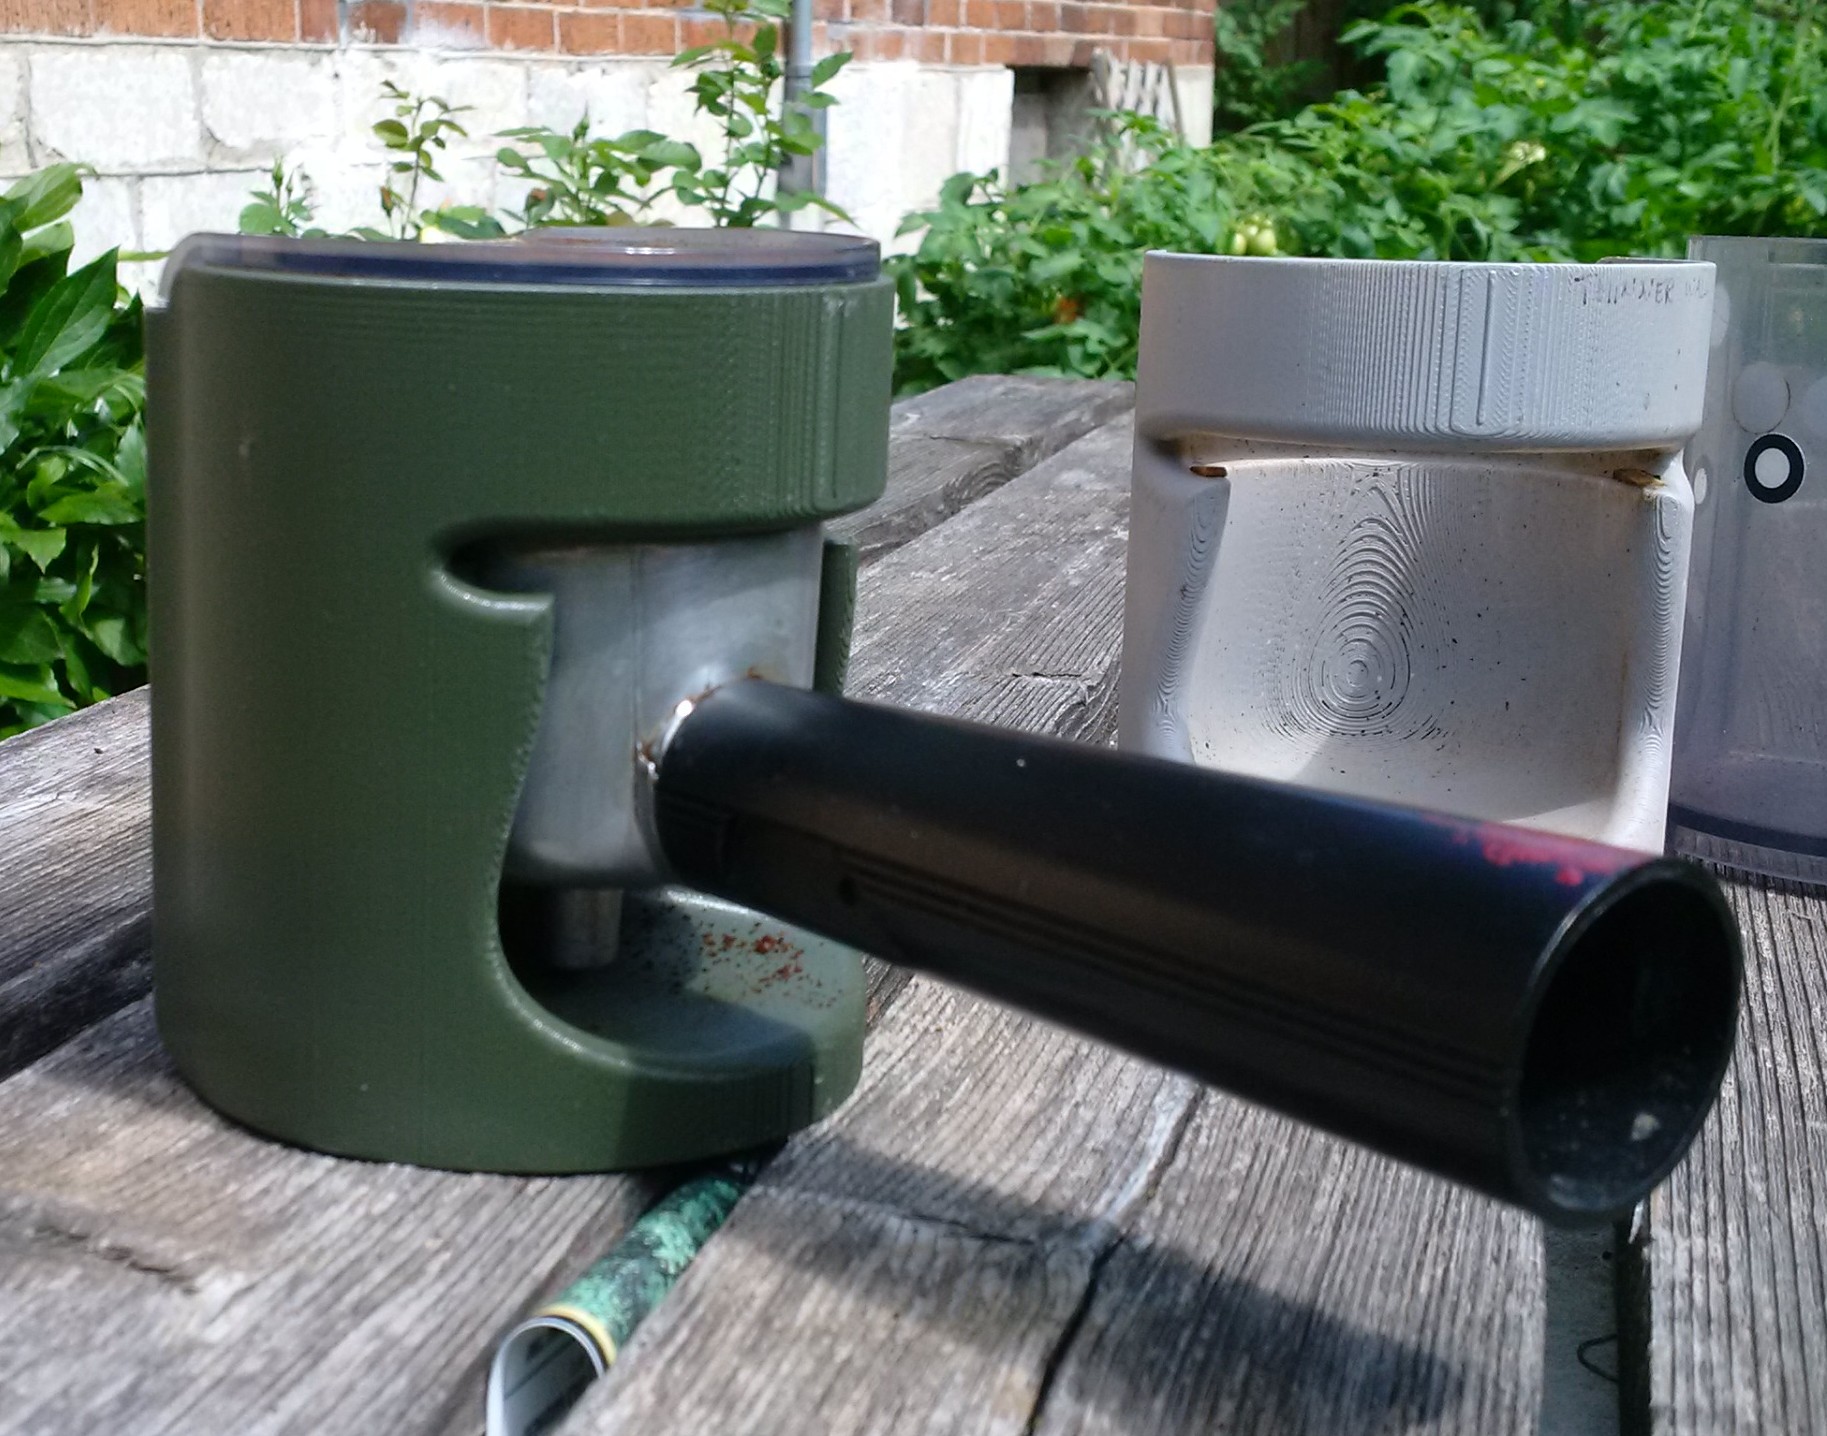 new grinder insert closeup 